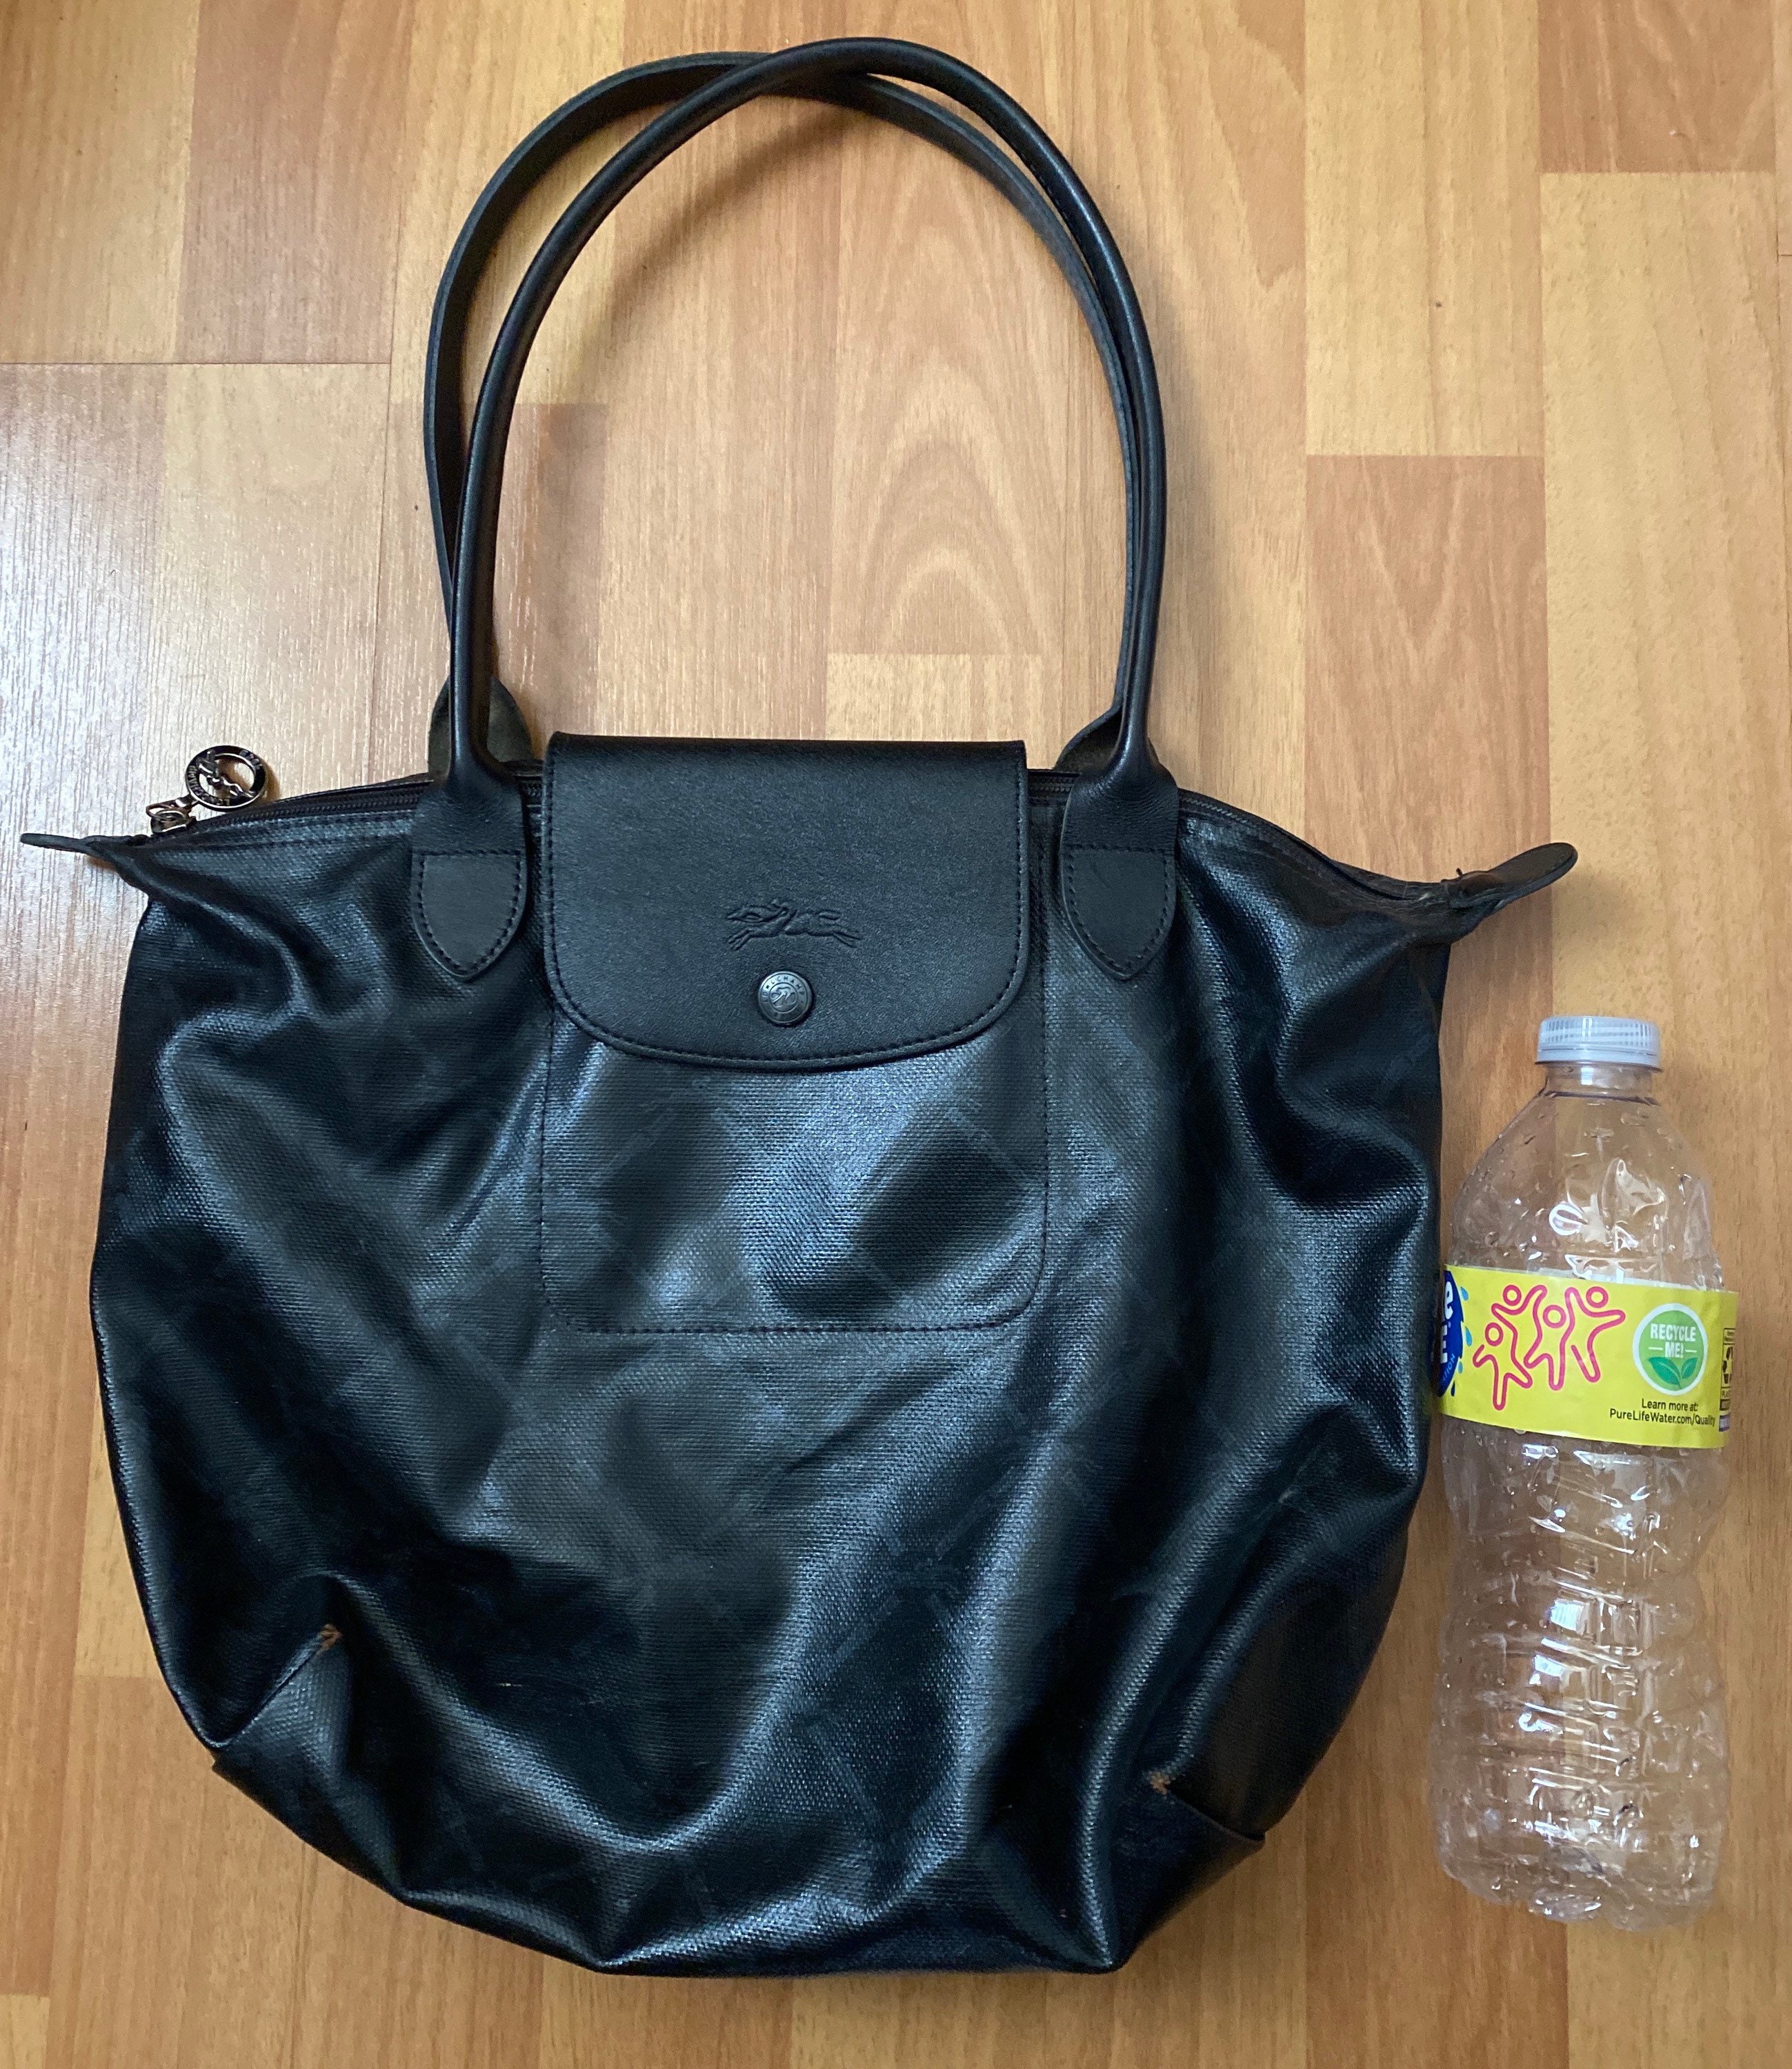 Longchamp, Bags, Longchamp Navy Nylon Hobo Shoulder Bag With Leather Trim